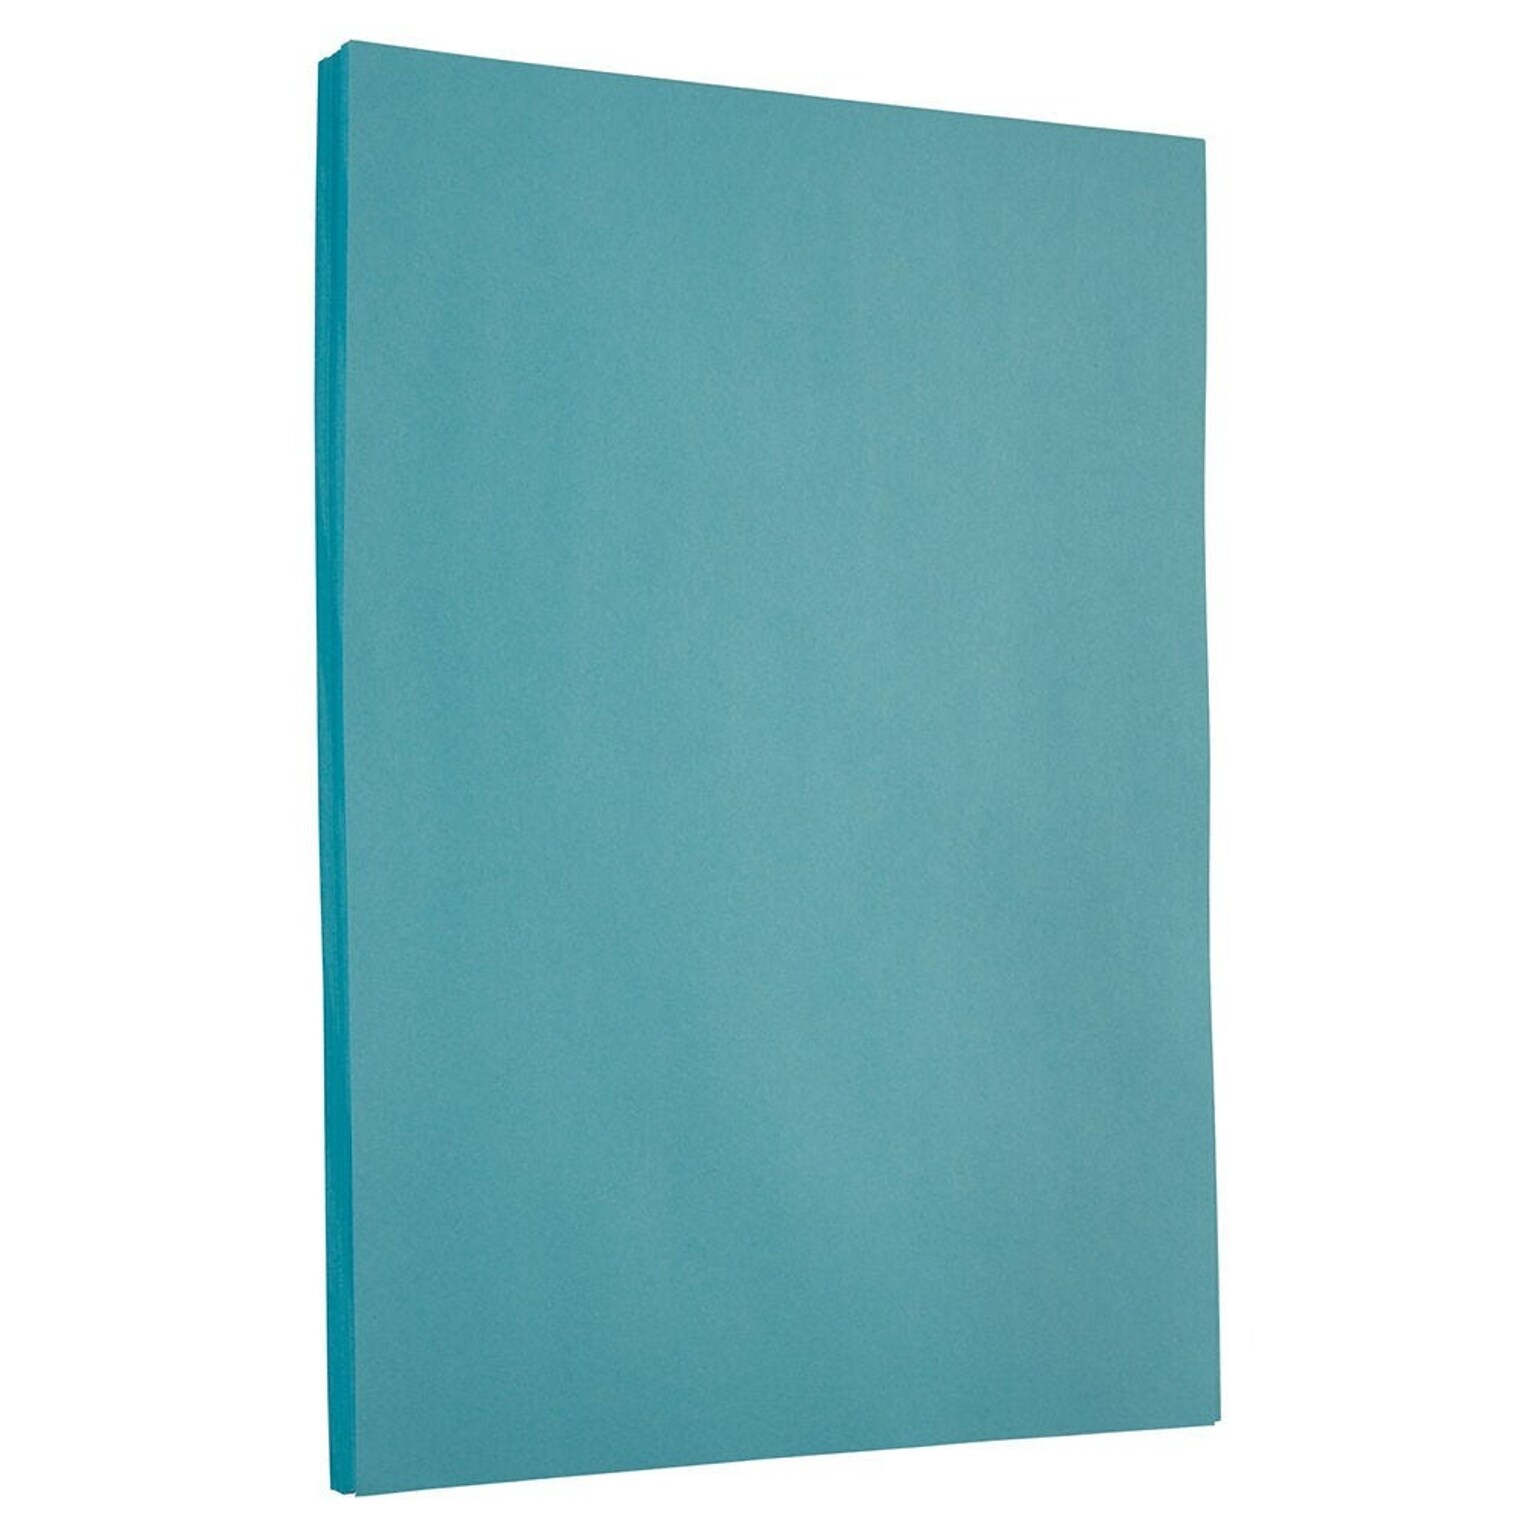 JAM PAPER 8.5 x 11 Colored Cardstock, 65lb, Blue, 100/pack  (101899G)